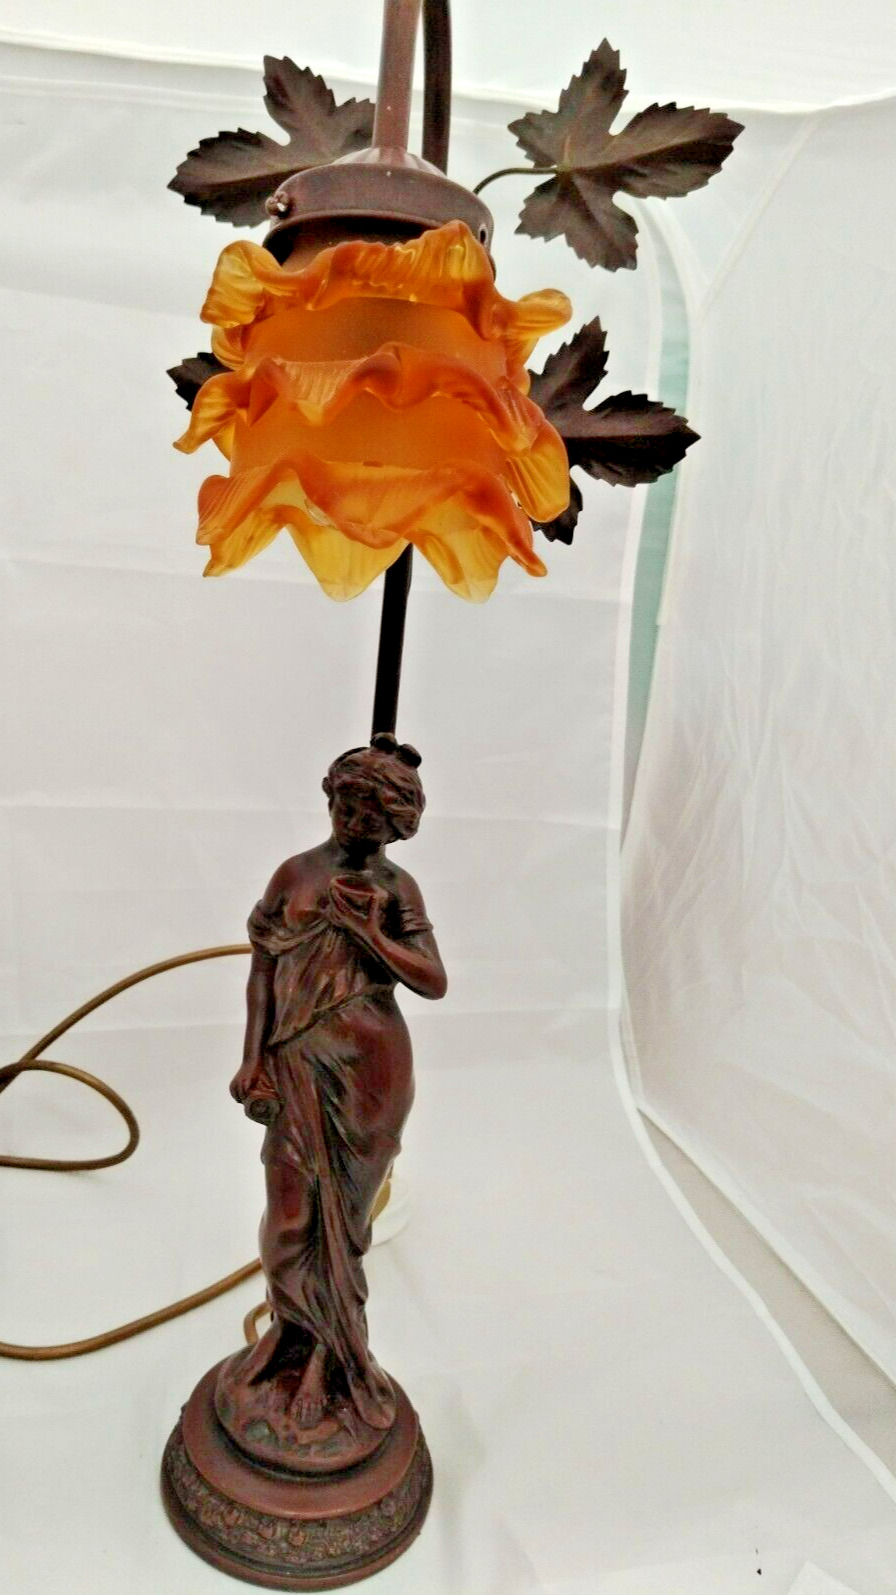 Art Nouveau Style Lady Figurine Statue Lamp 55cm tall ~ Amber glass shade